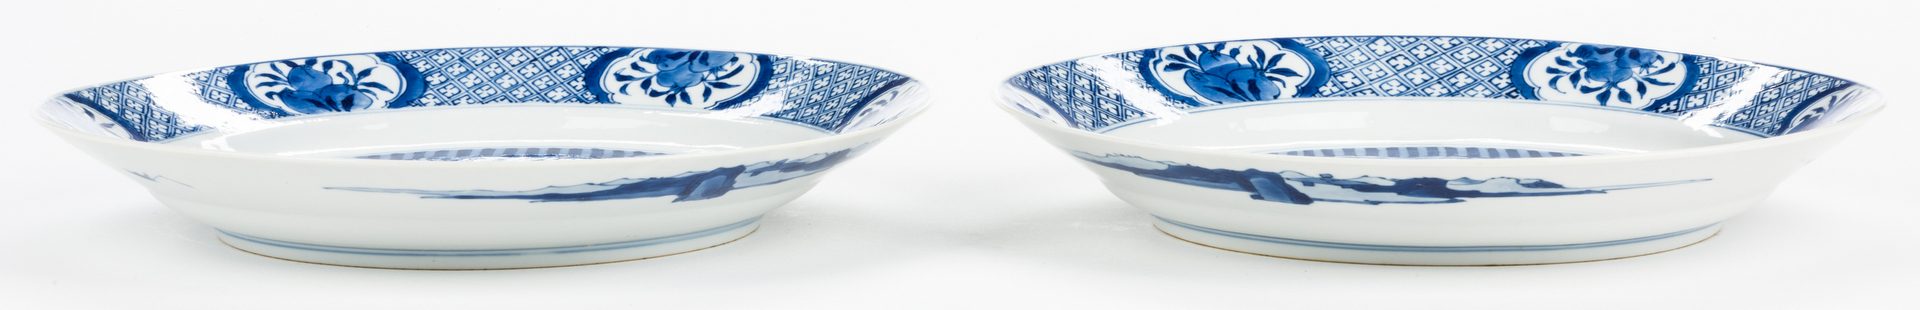 Lot 21: Qing Dynasty Blue & White Porcelain Plates